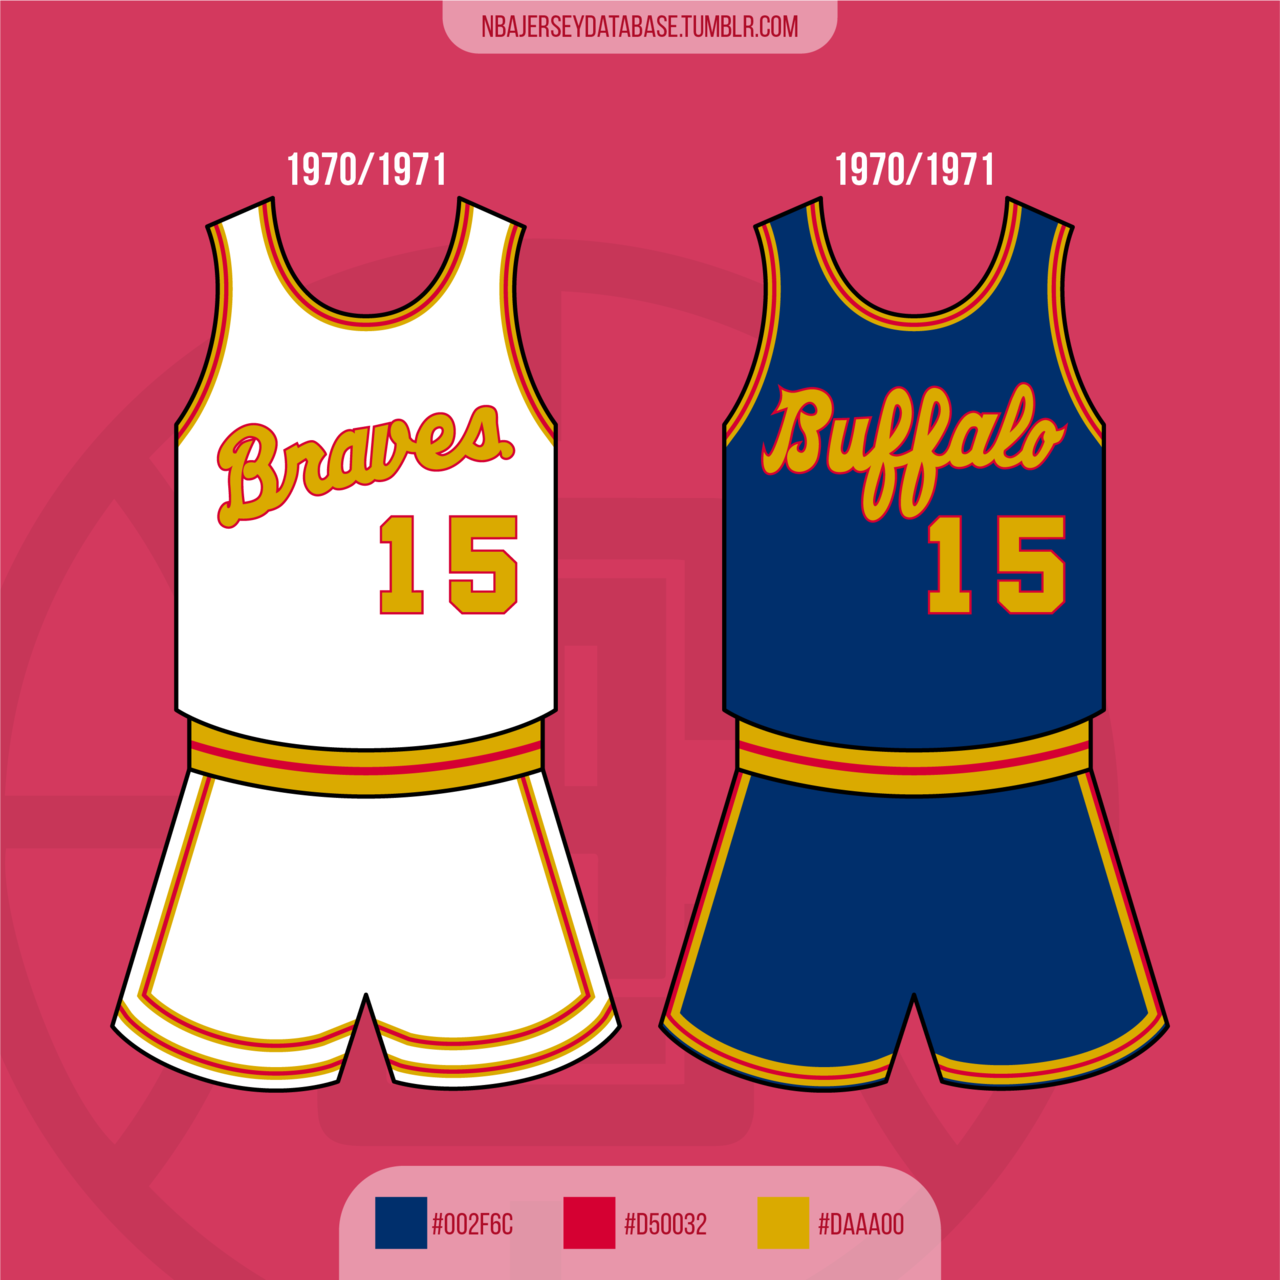 NBA Jersey Database, Buffalo Braves 1970-1971 Record: 22-60 (27%)